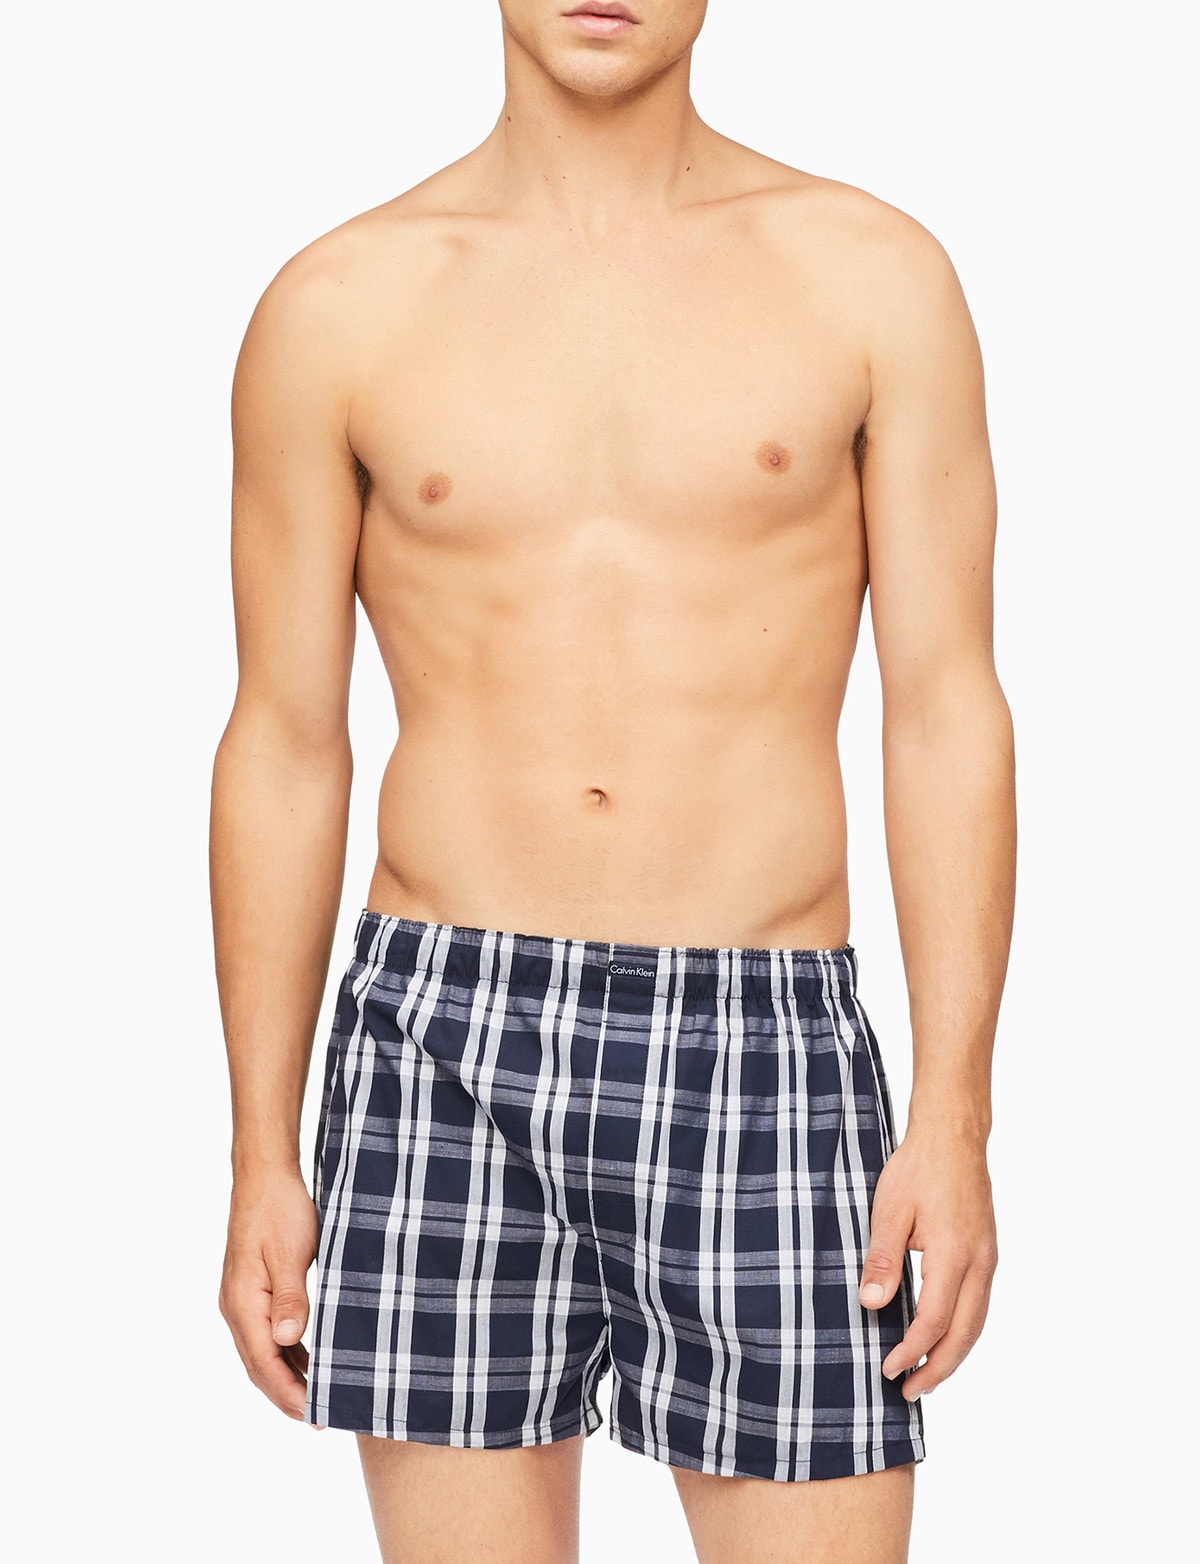 Calvin Klein Classic Woven Boxers, 3-Pack, - Underwear